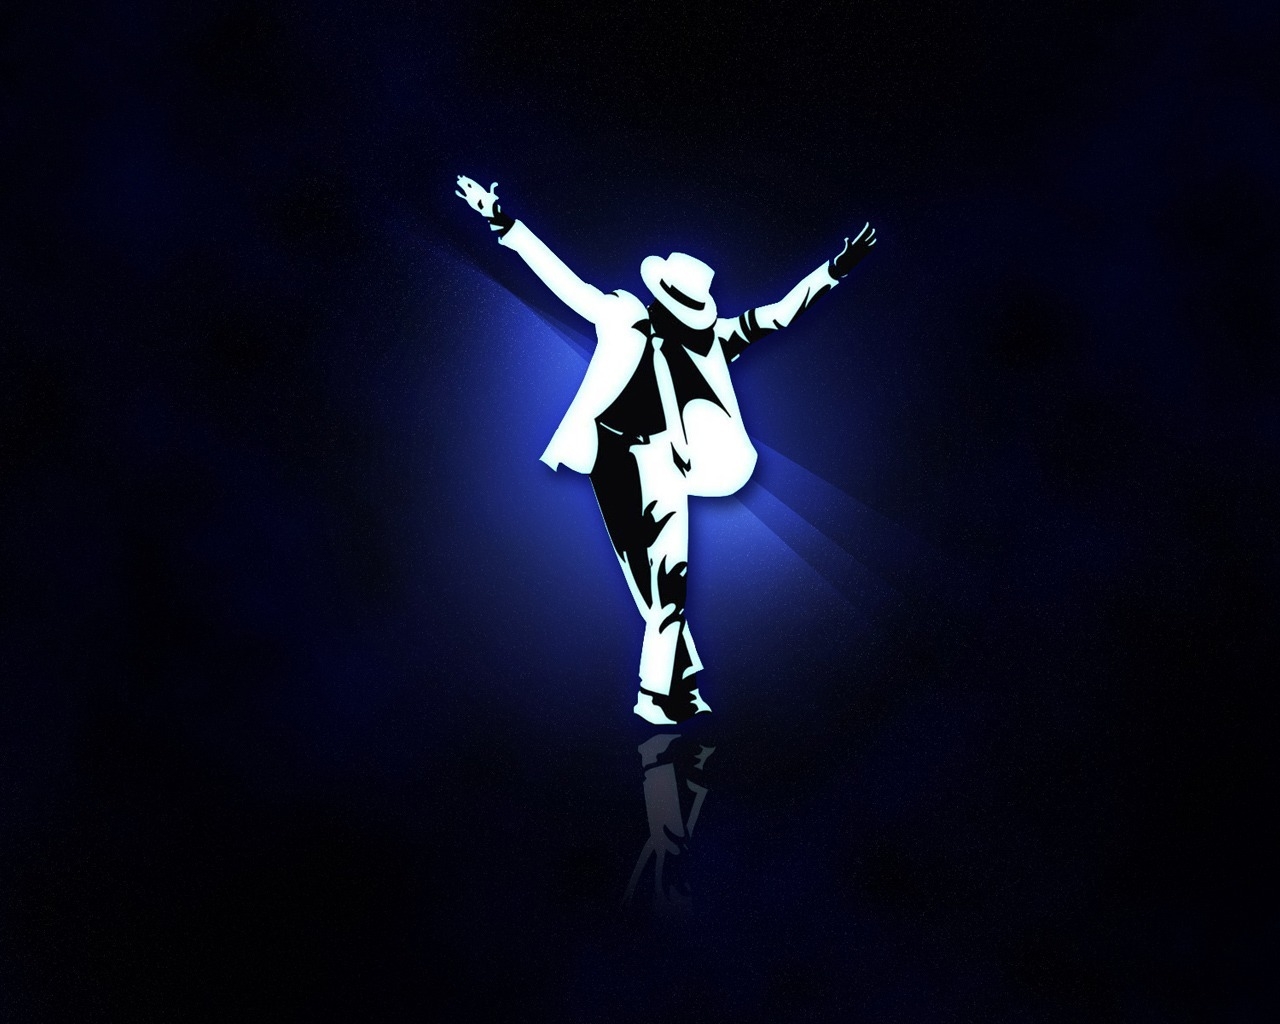 Michael Jackson Tribute for 1280 x 1024 resolution